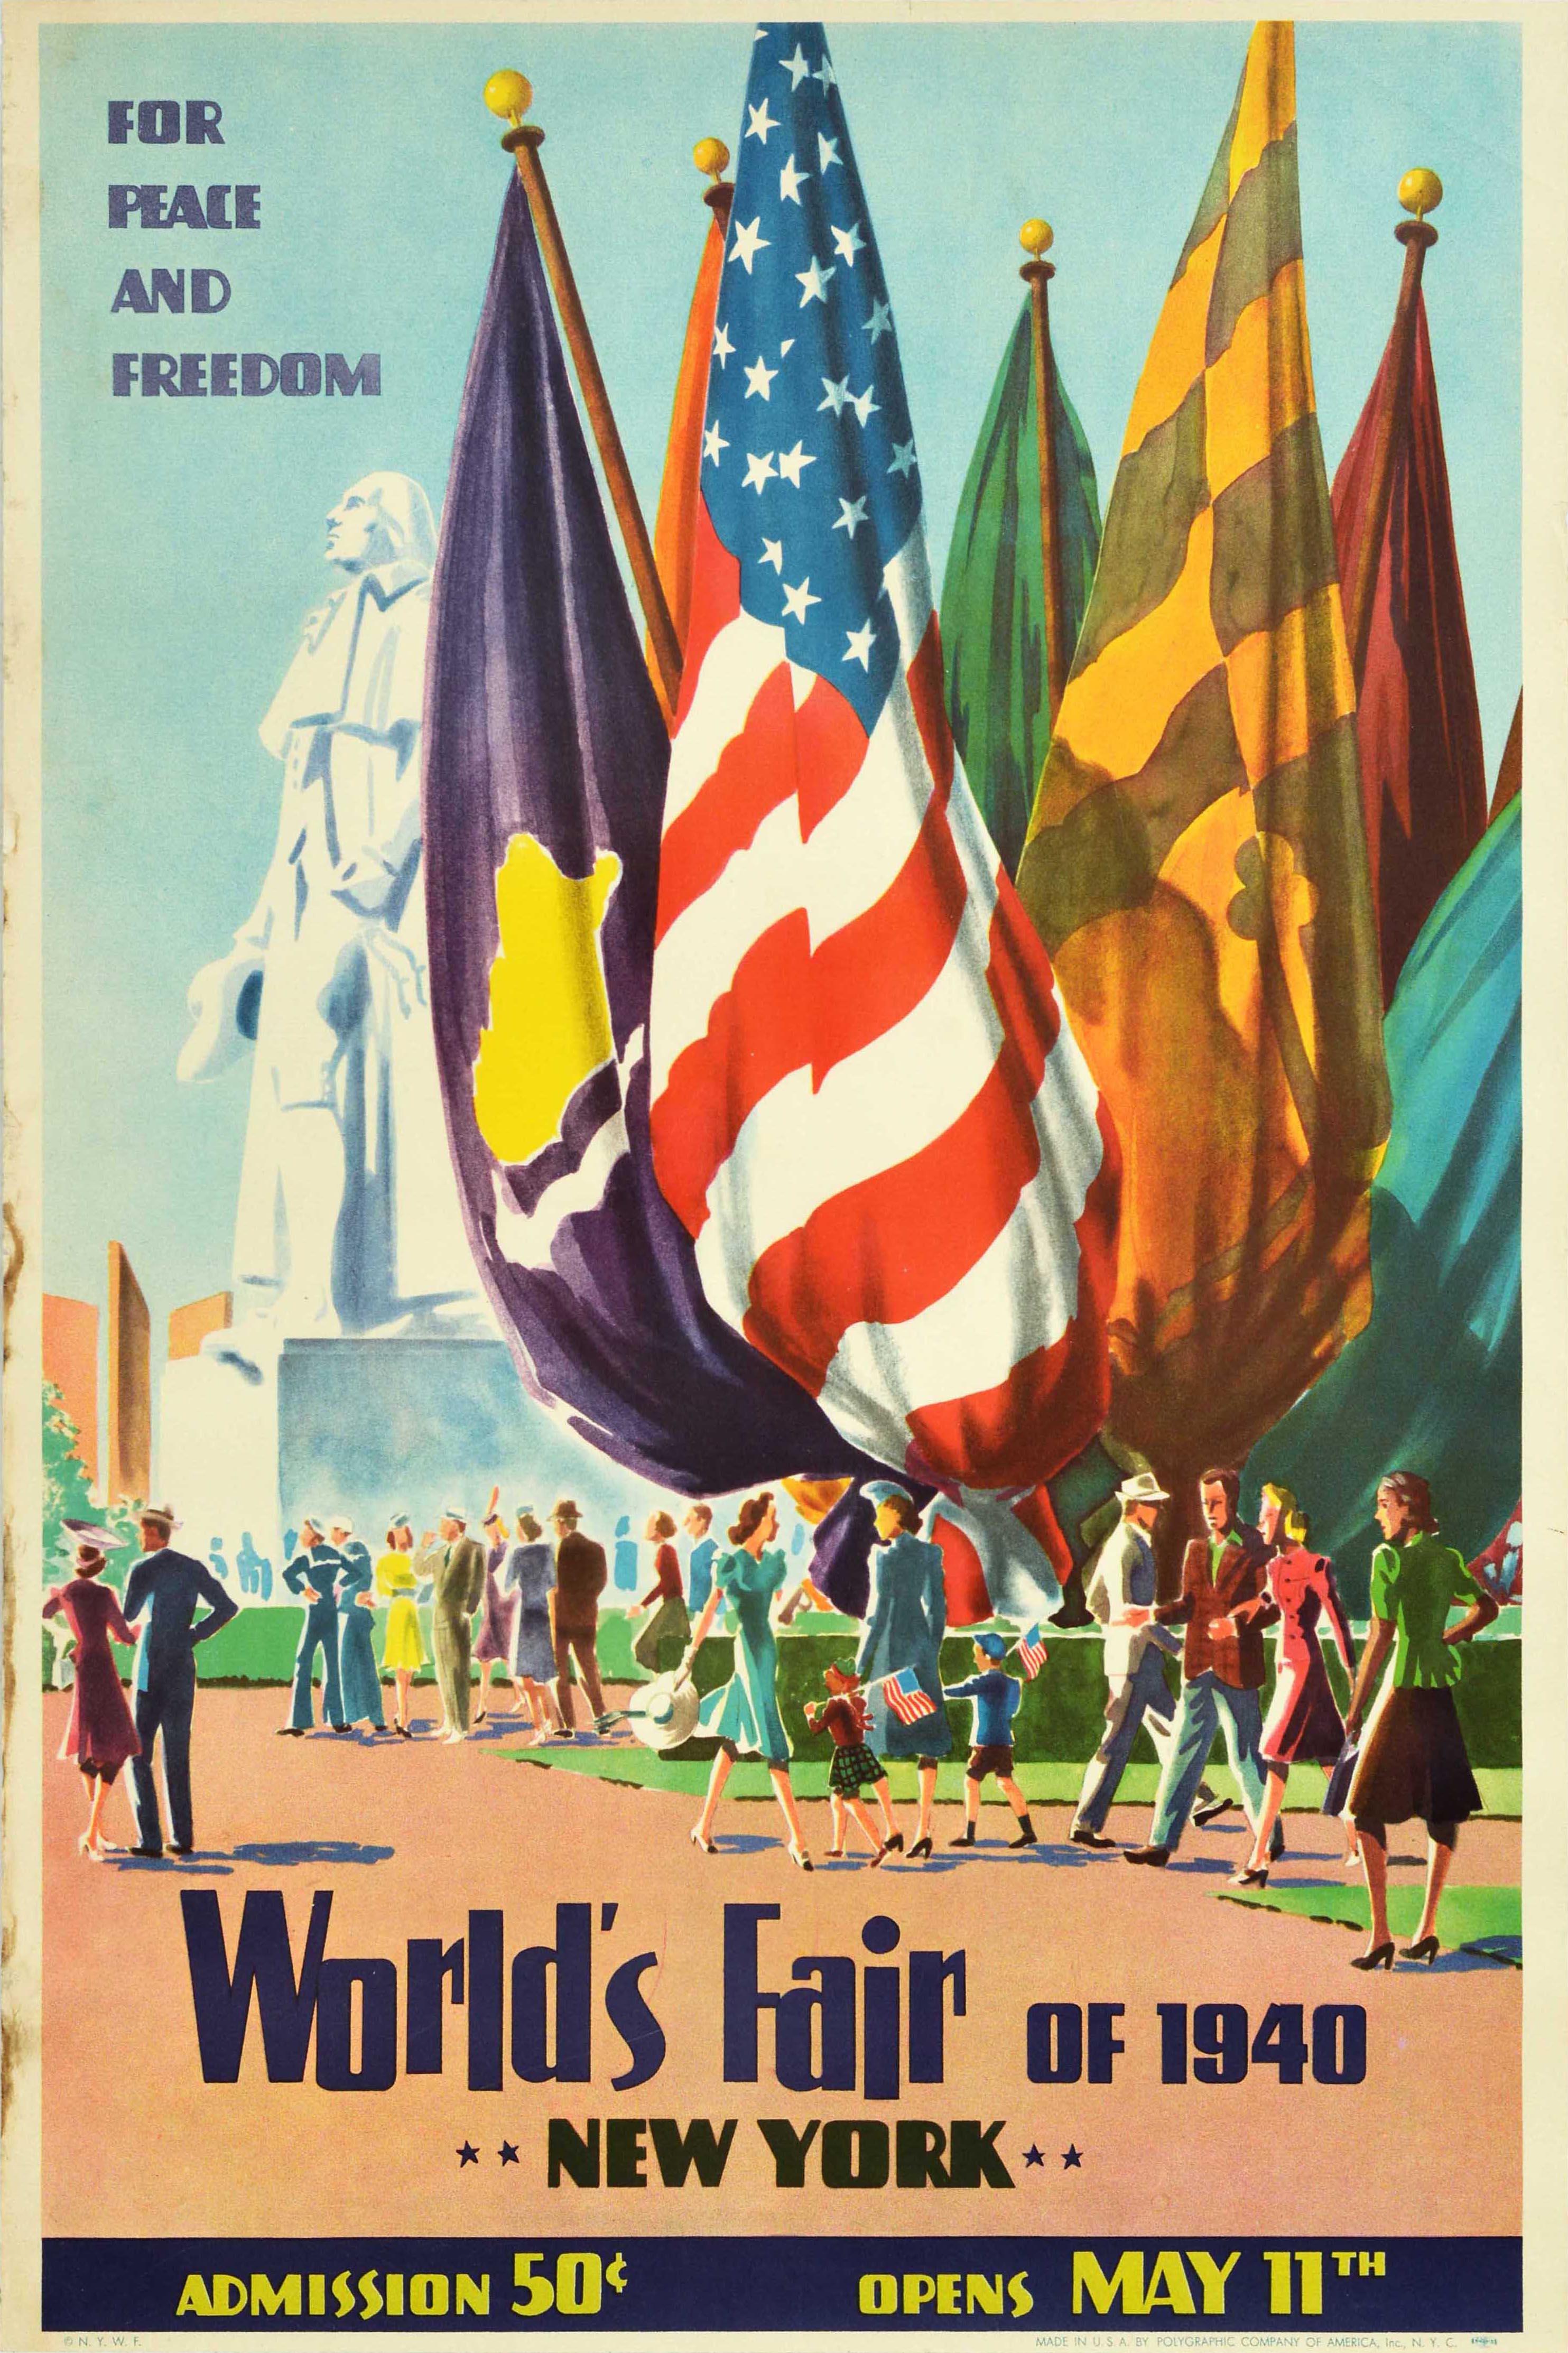 Unknown Print - Original Vintage Travel Advertising Poster World Fair 1940 New York Washington